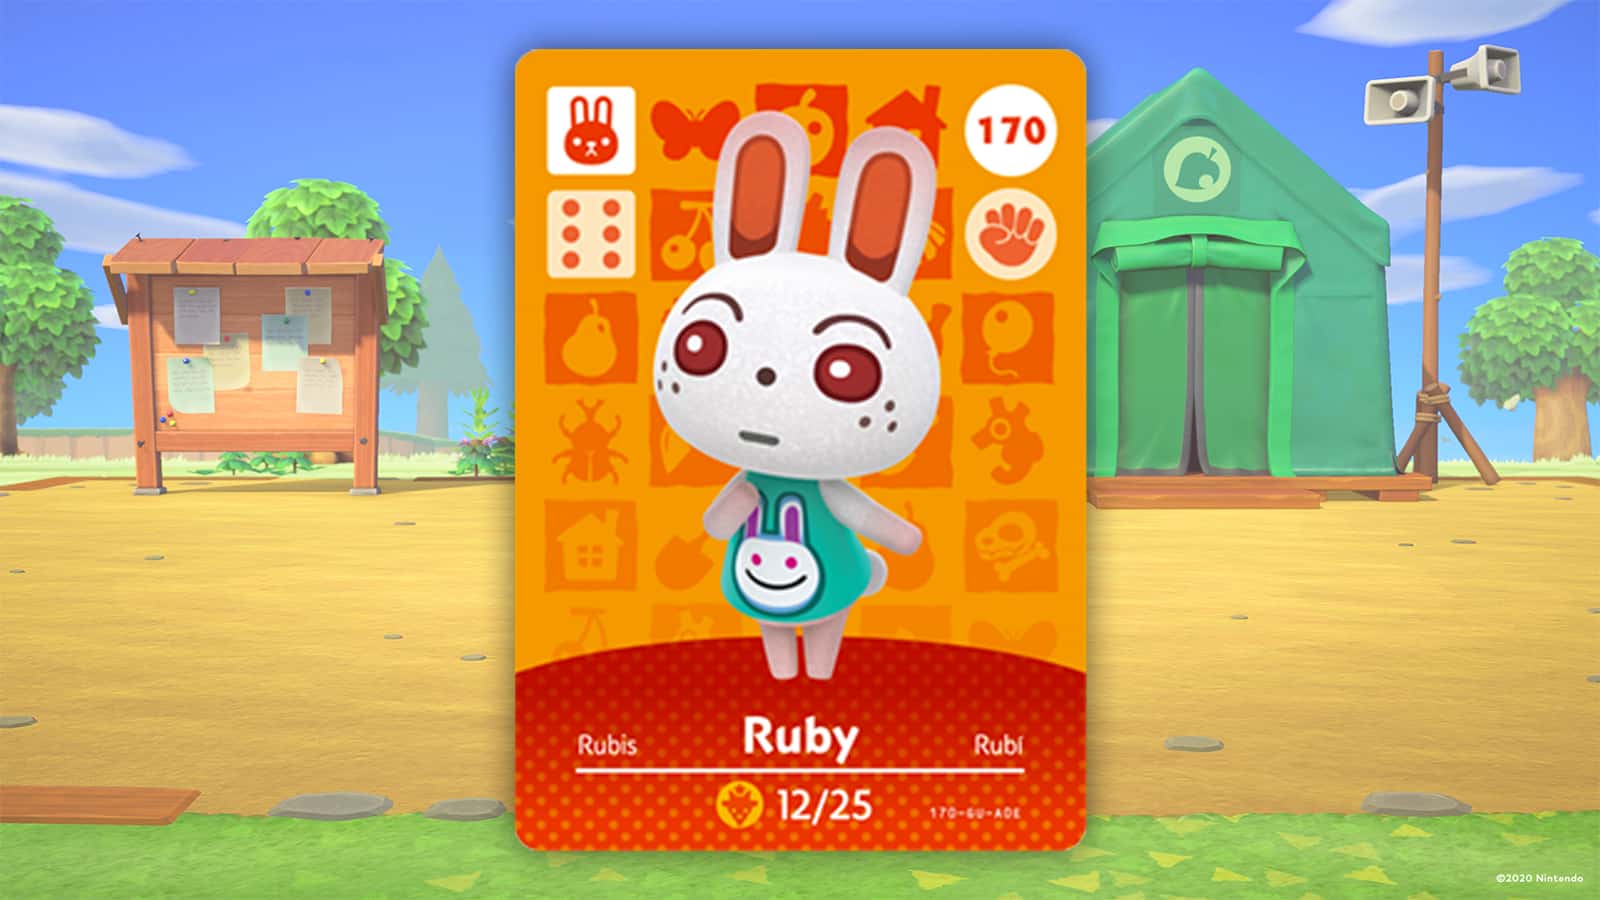 Ruby Amiibo Card in Animal Crossing New Horizons